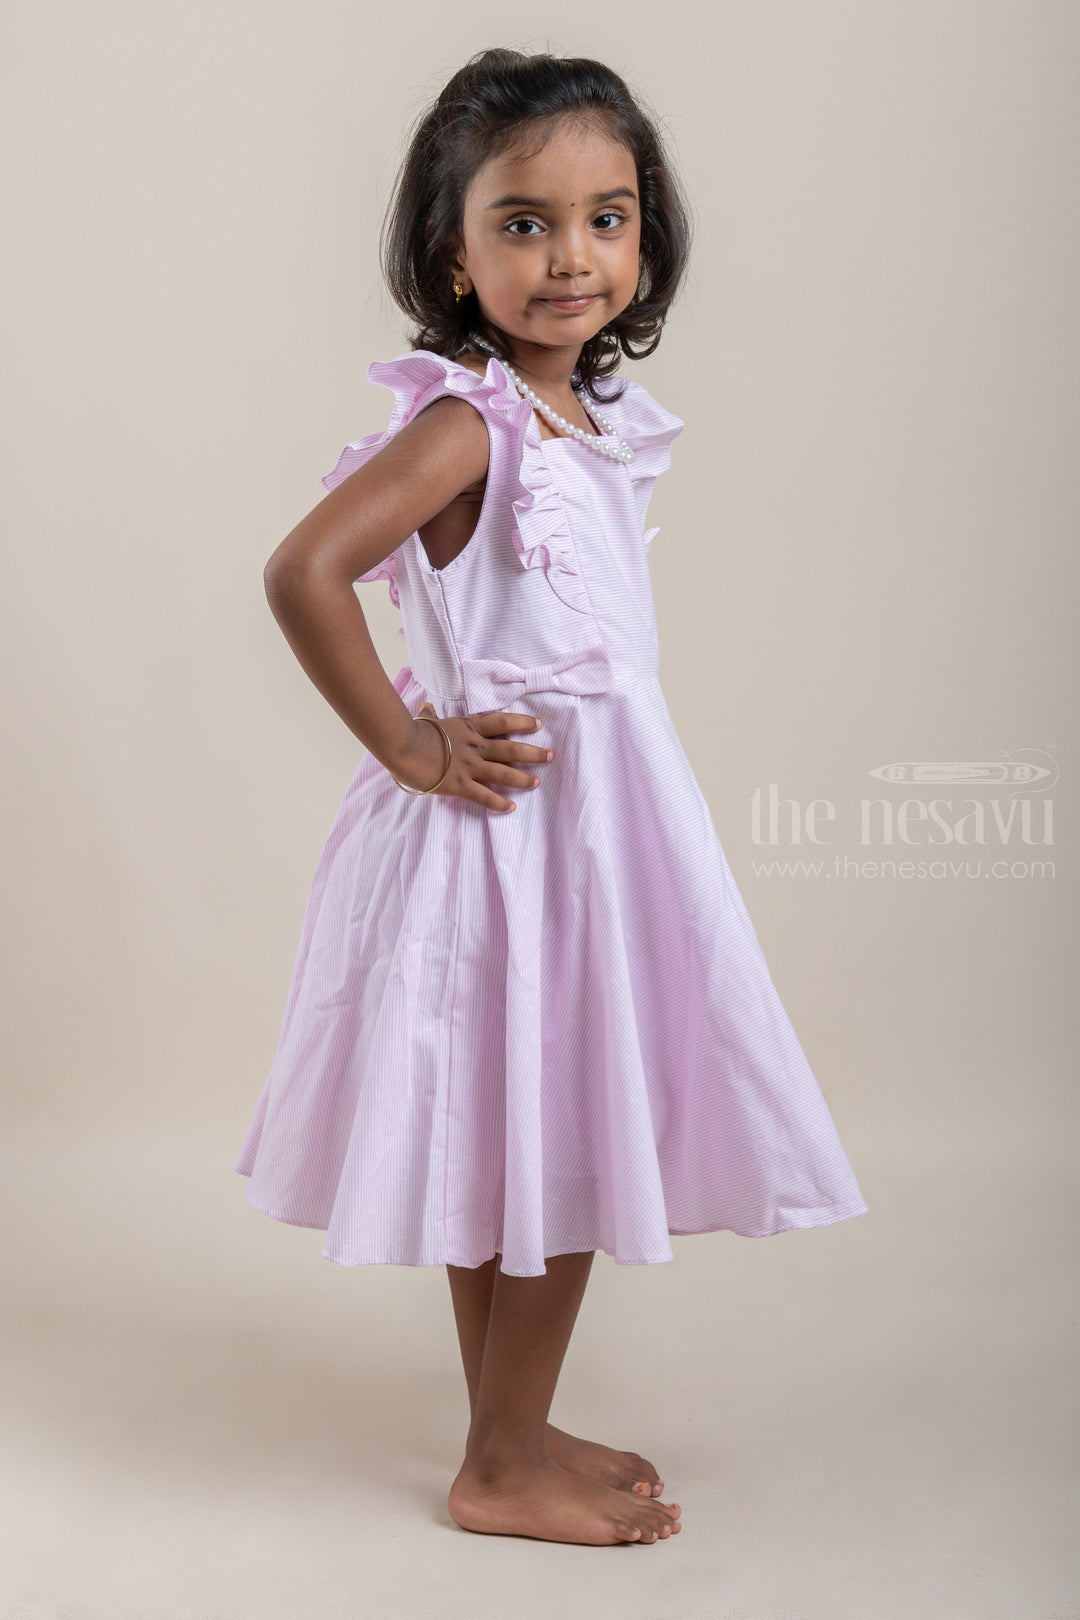 The Nesavu Frocks & Dresses Casual Cotton Frock with Pink Pin Striped Design and Ruffled Yoke For Girls psr silks Nesavu